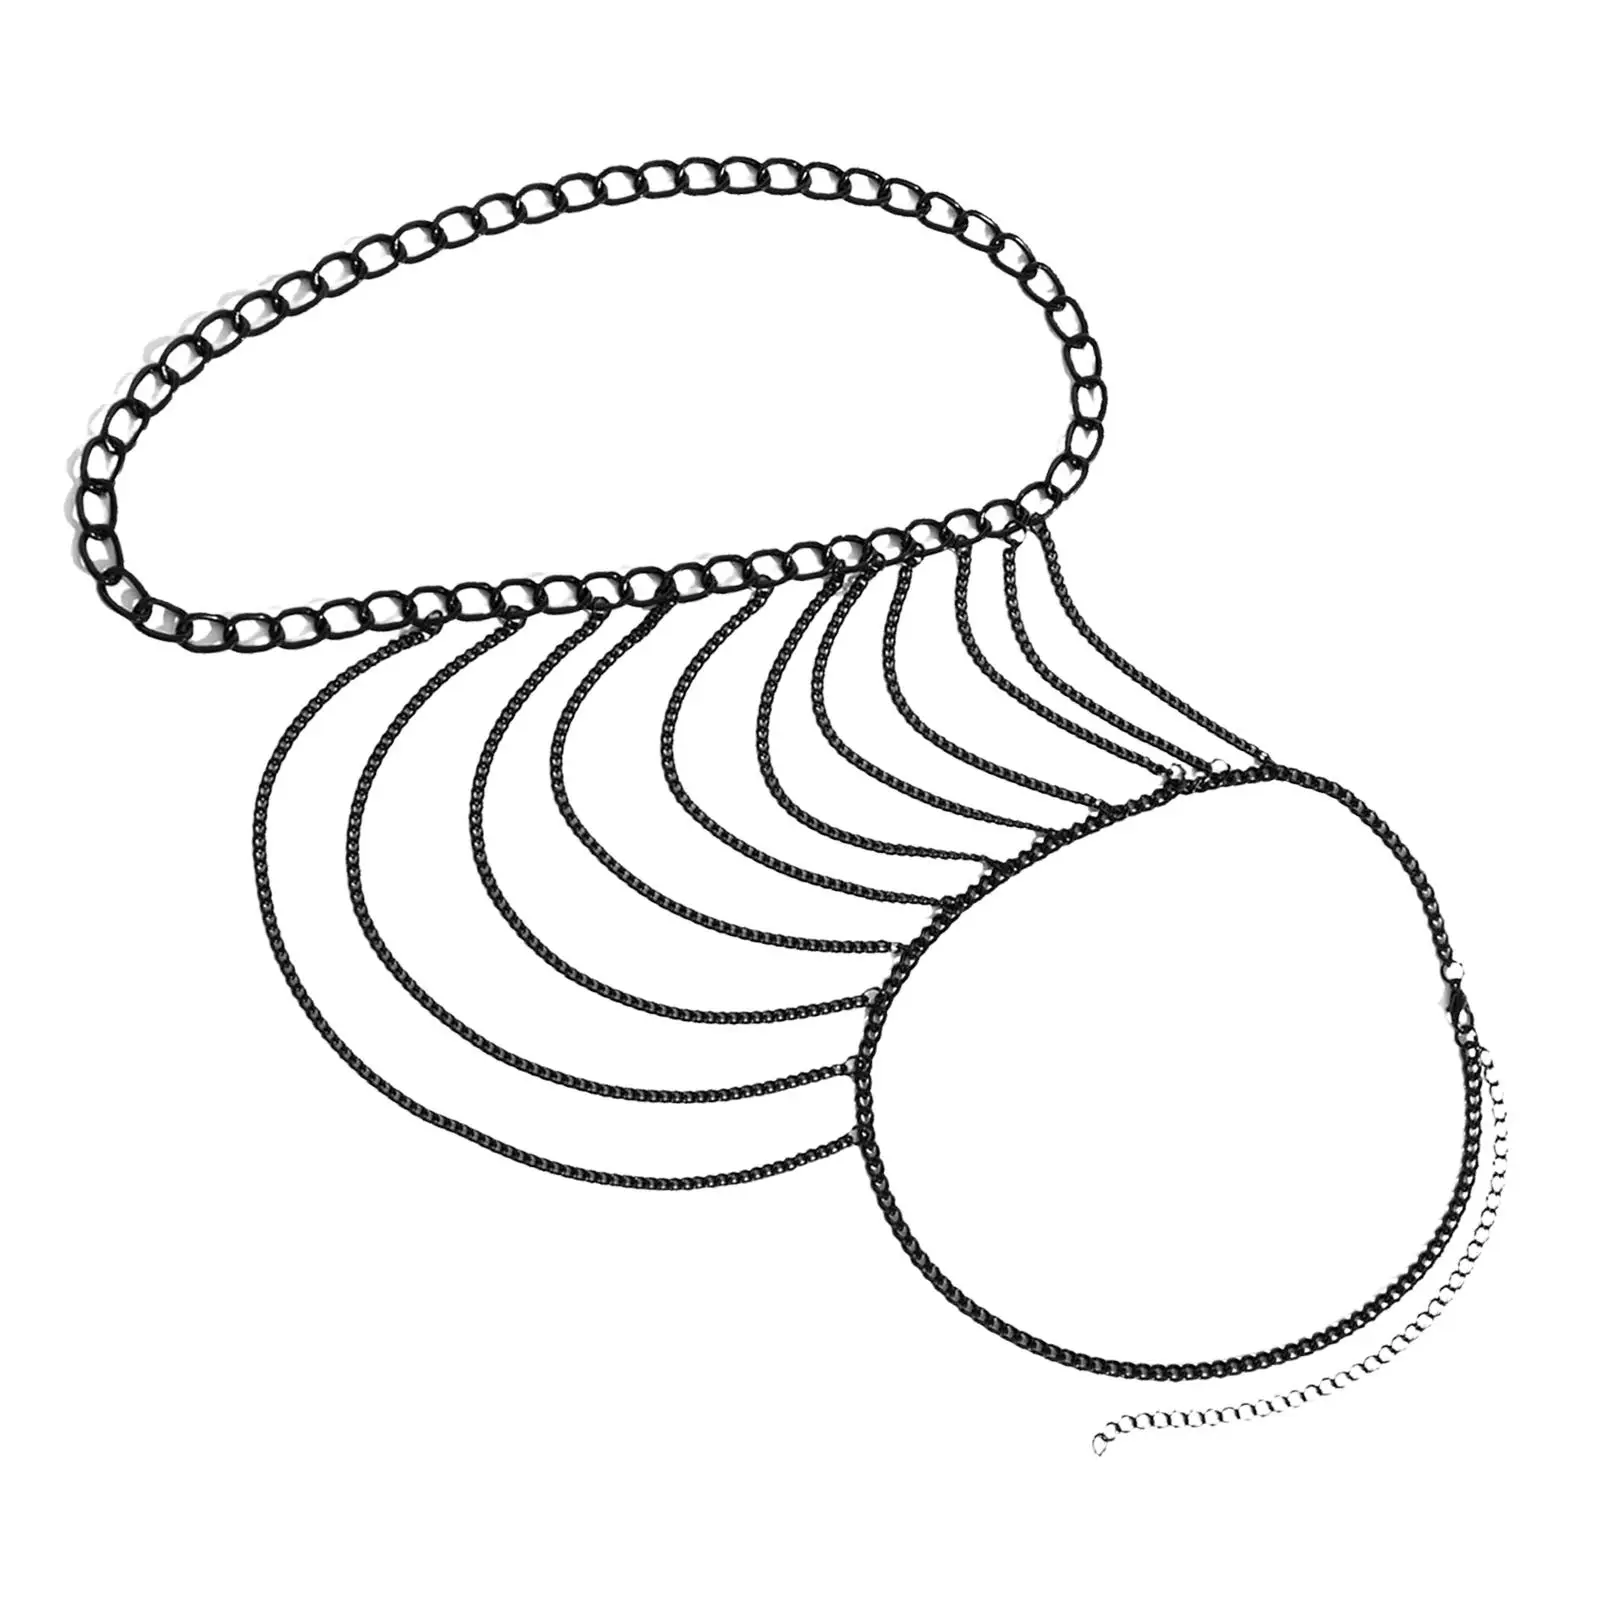 Choker Necklace Shoulder Tassel Chain Black for Club Bar Punk Jewelry Rock Choker